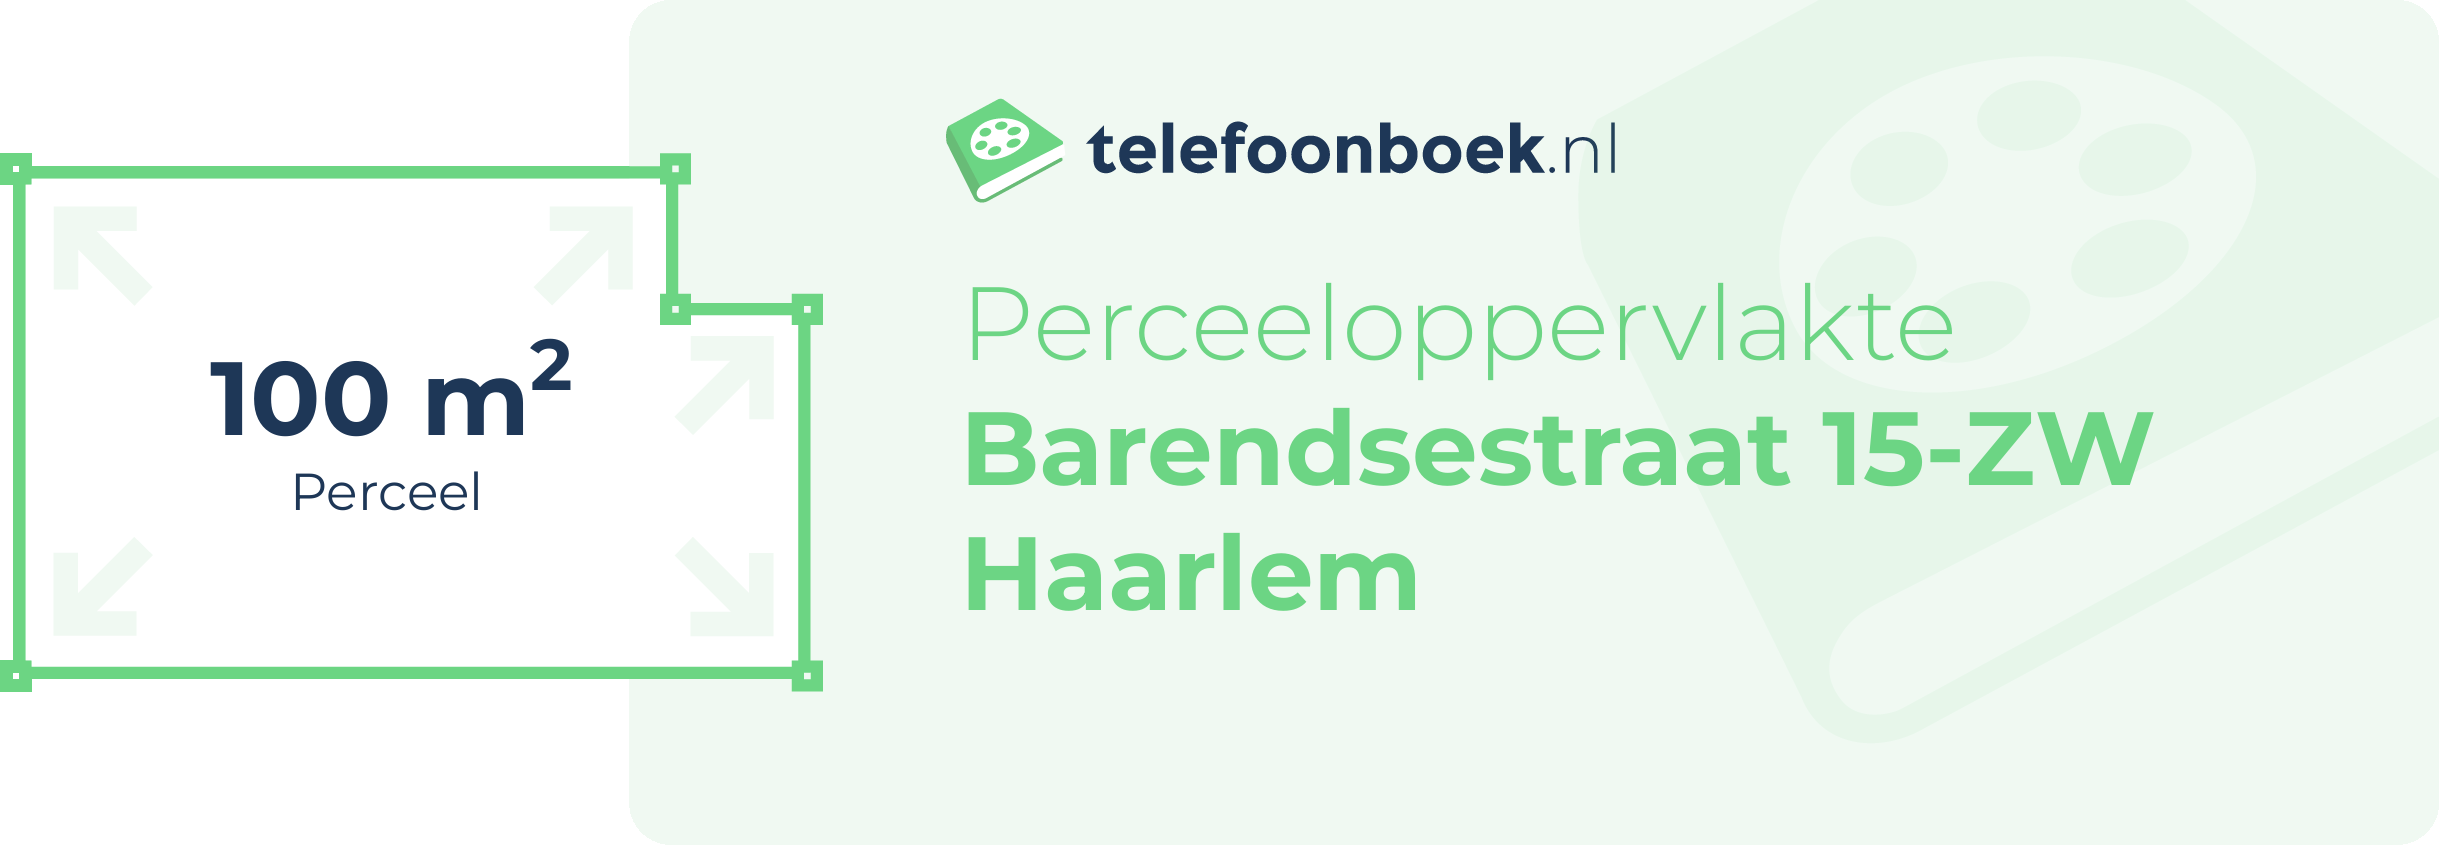 Perceeloppervlakte Barendsestraat 15-ZW Haarlem